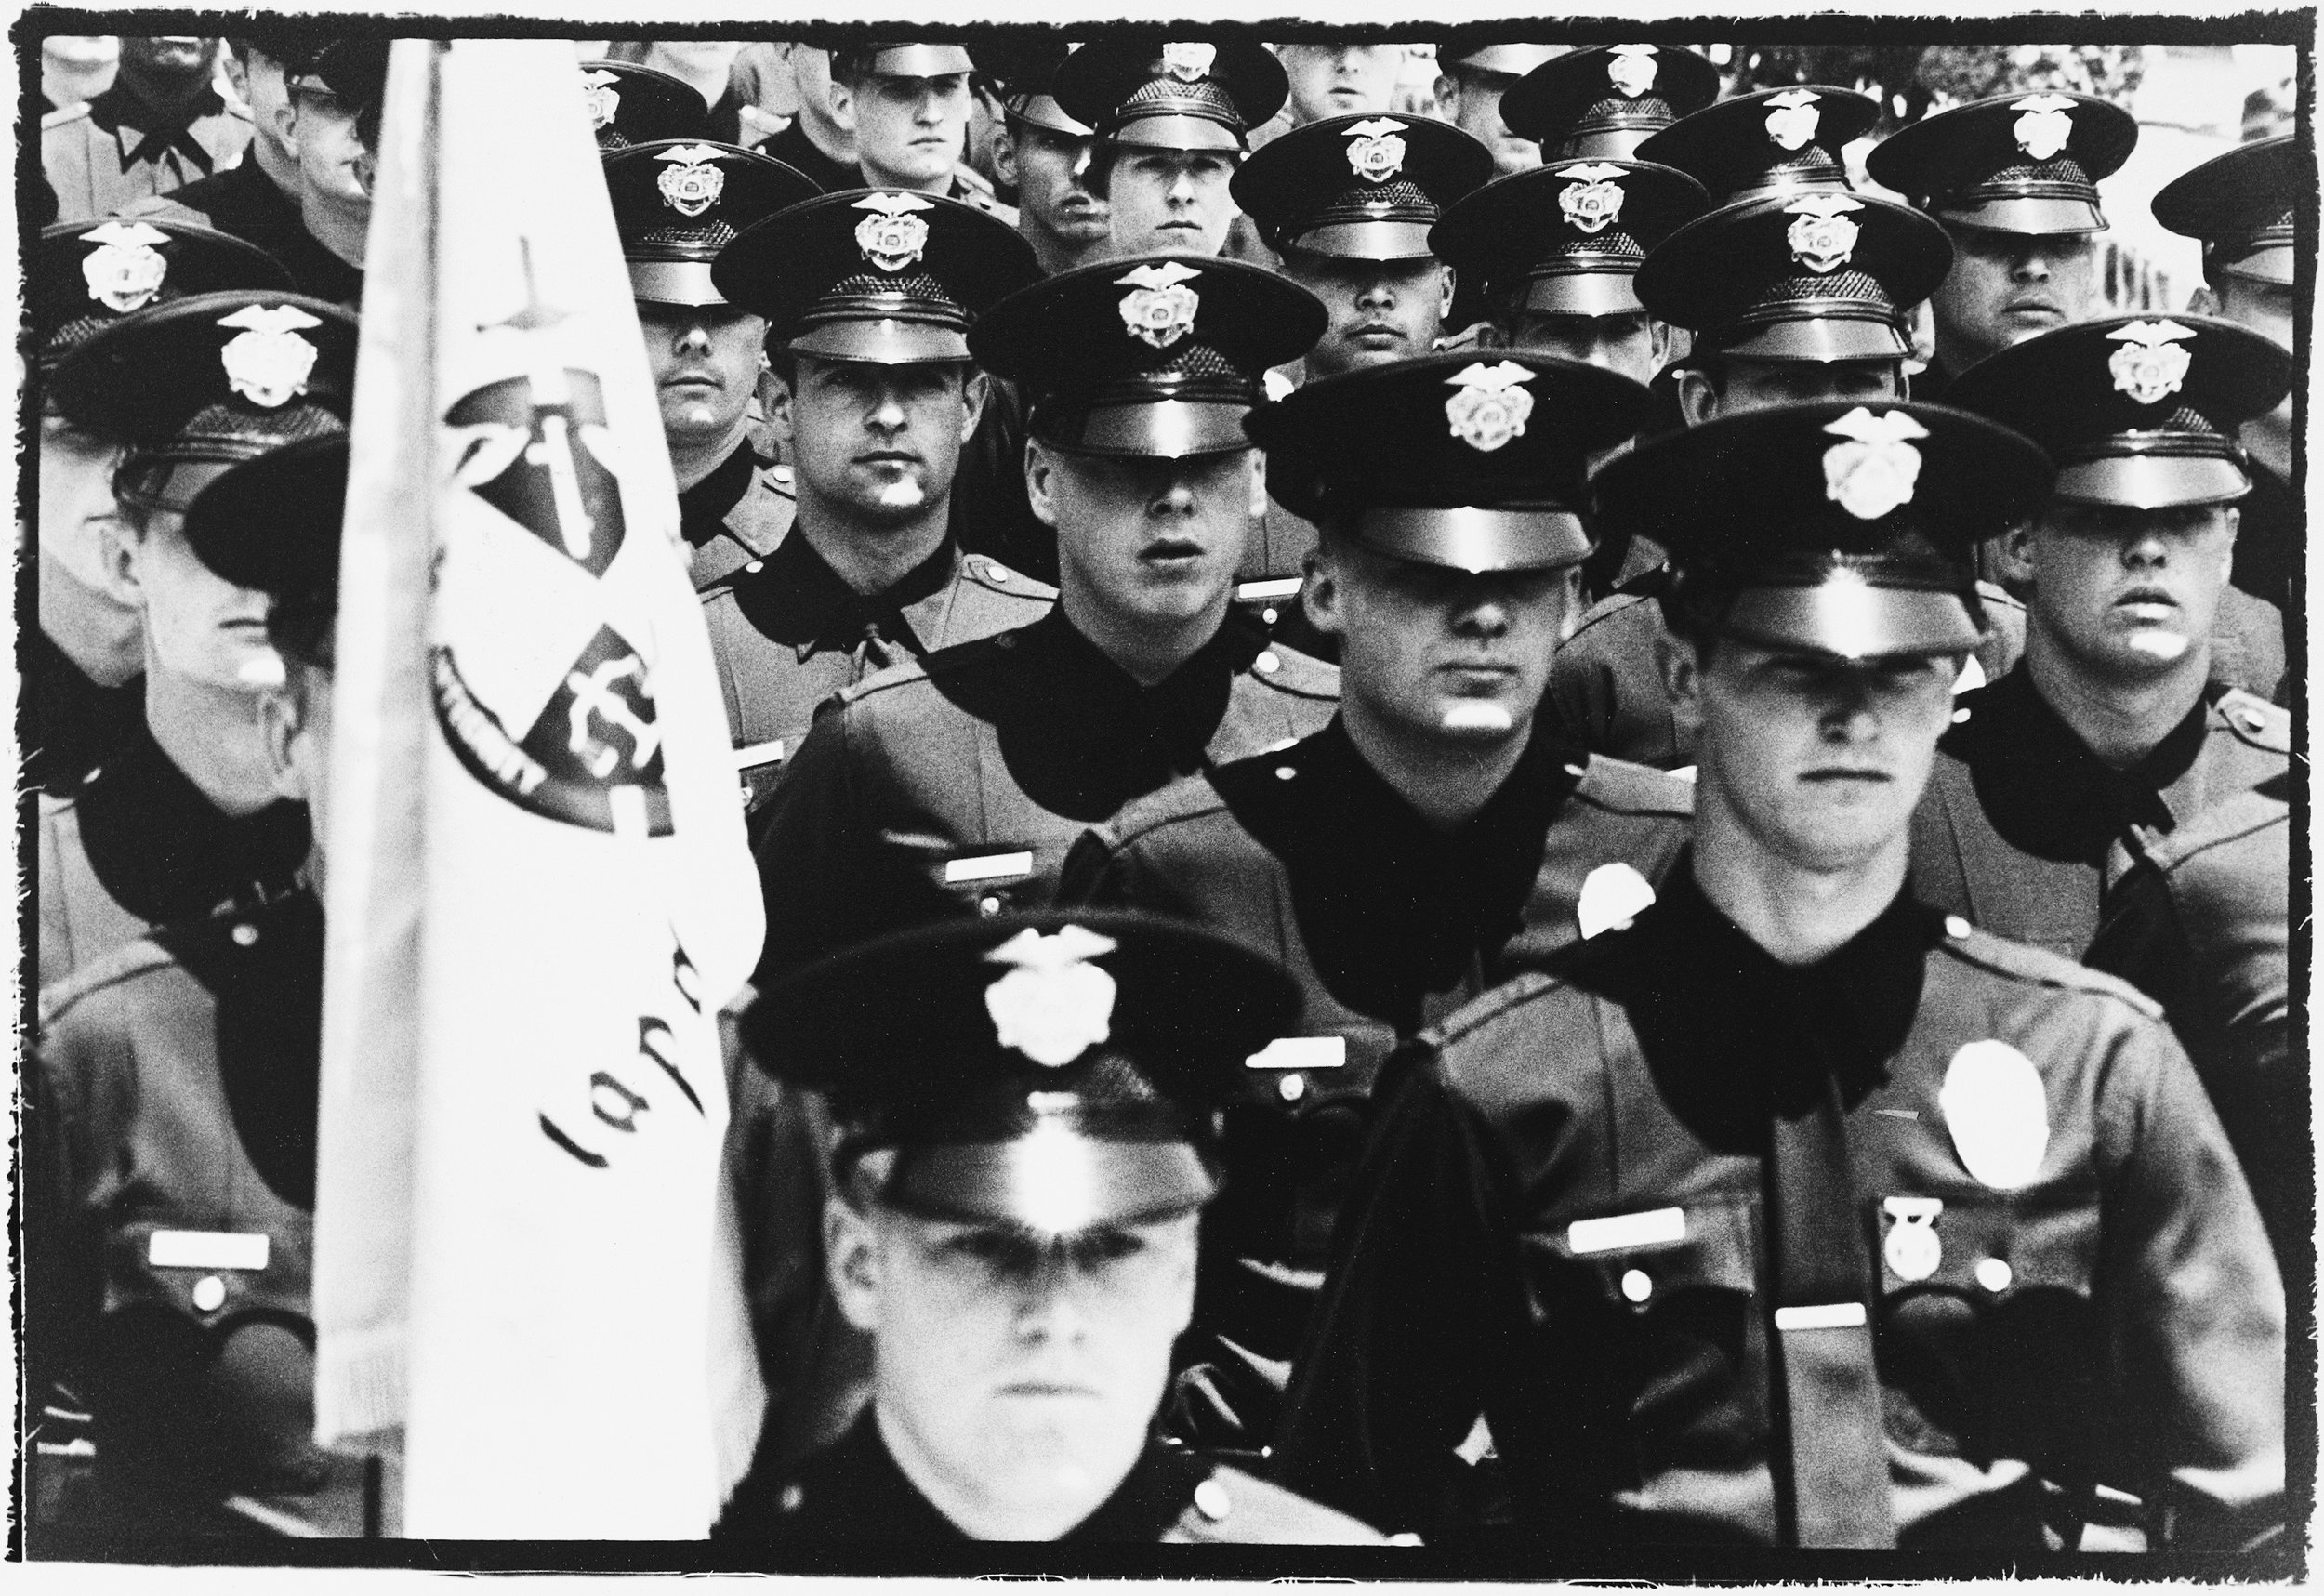 L.A. POLICE ACADEMY (1979-1980)